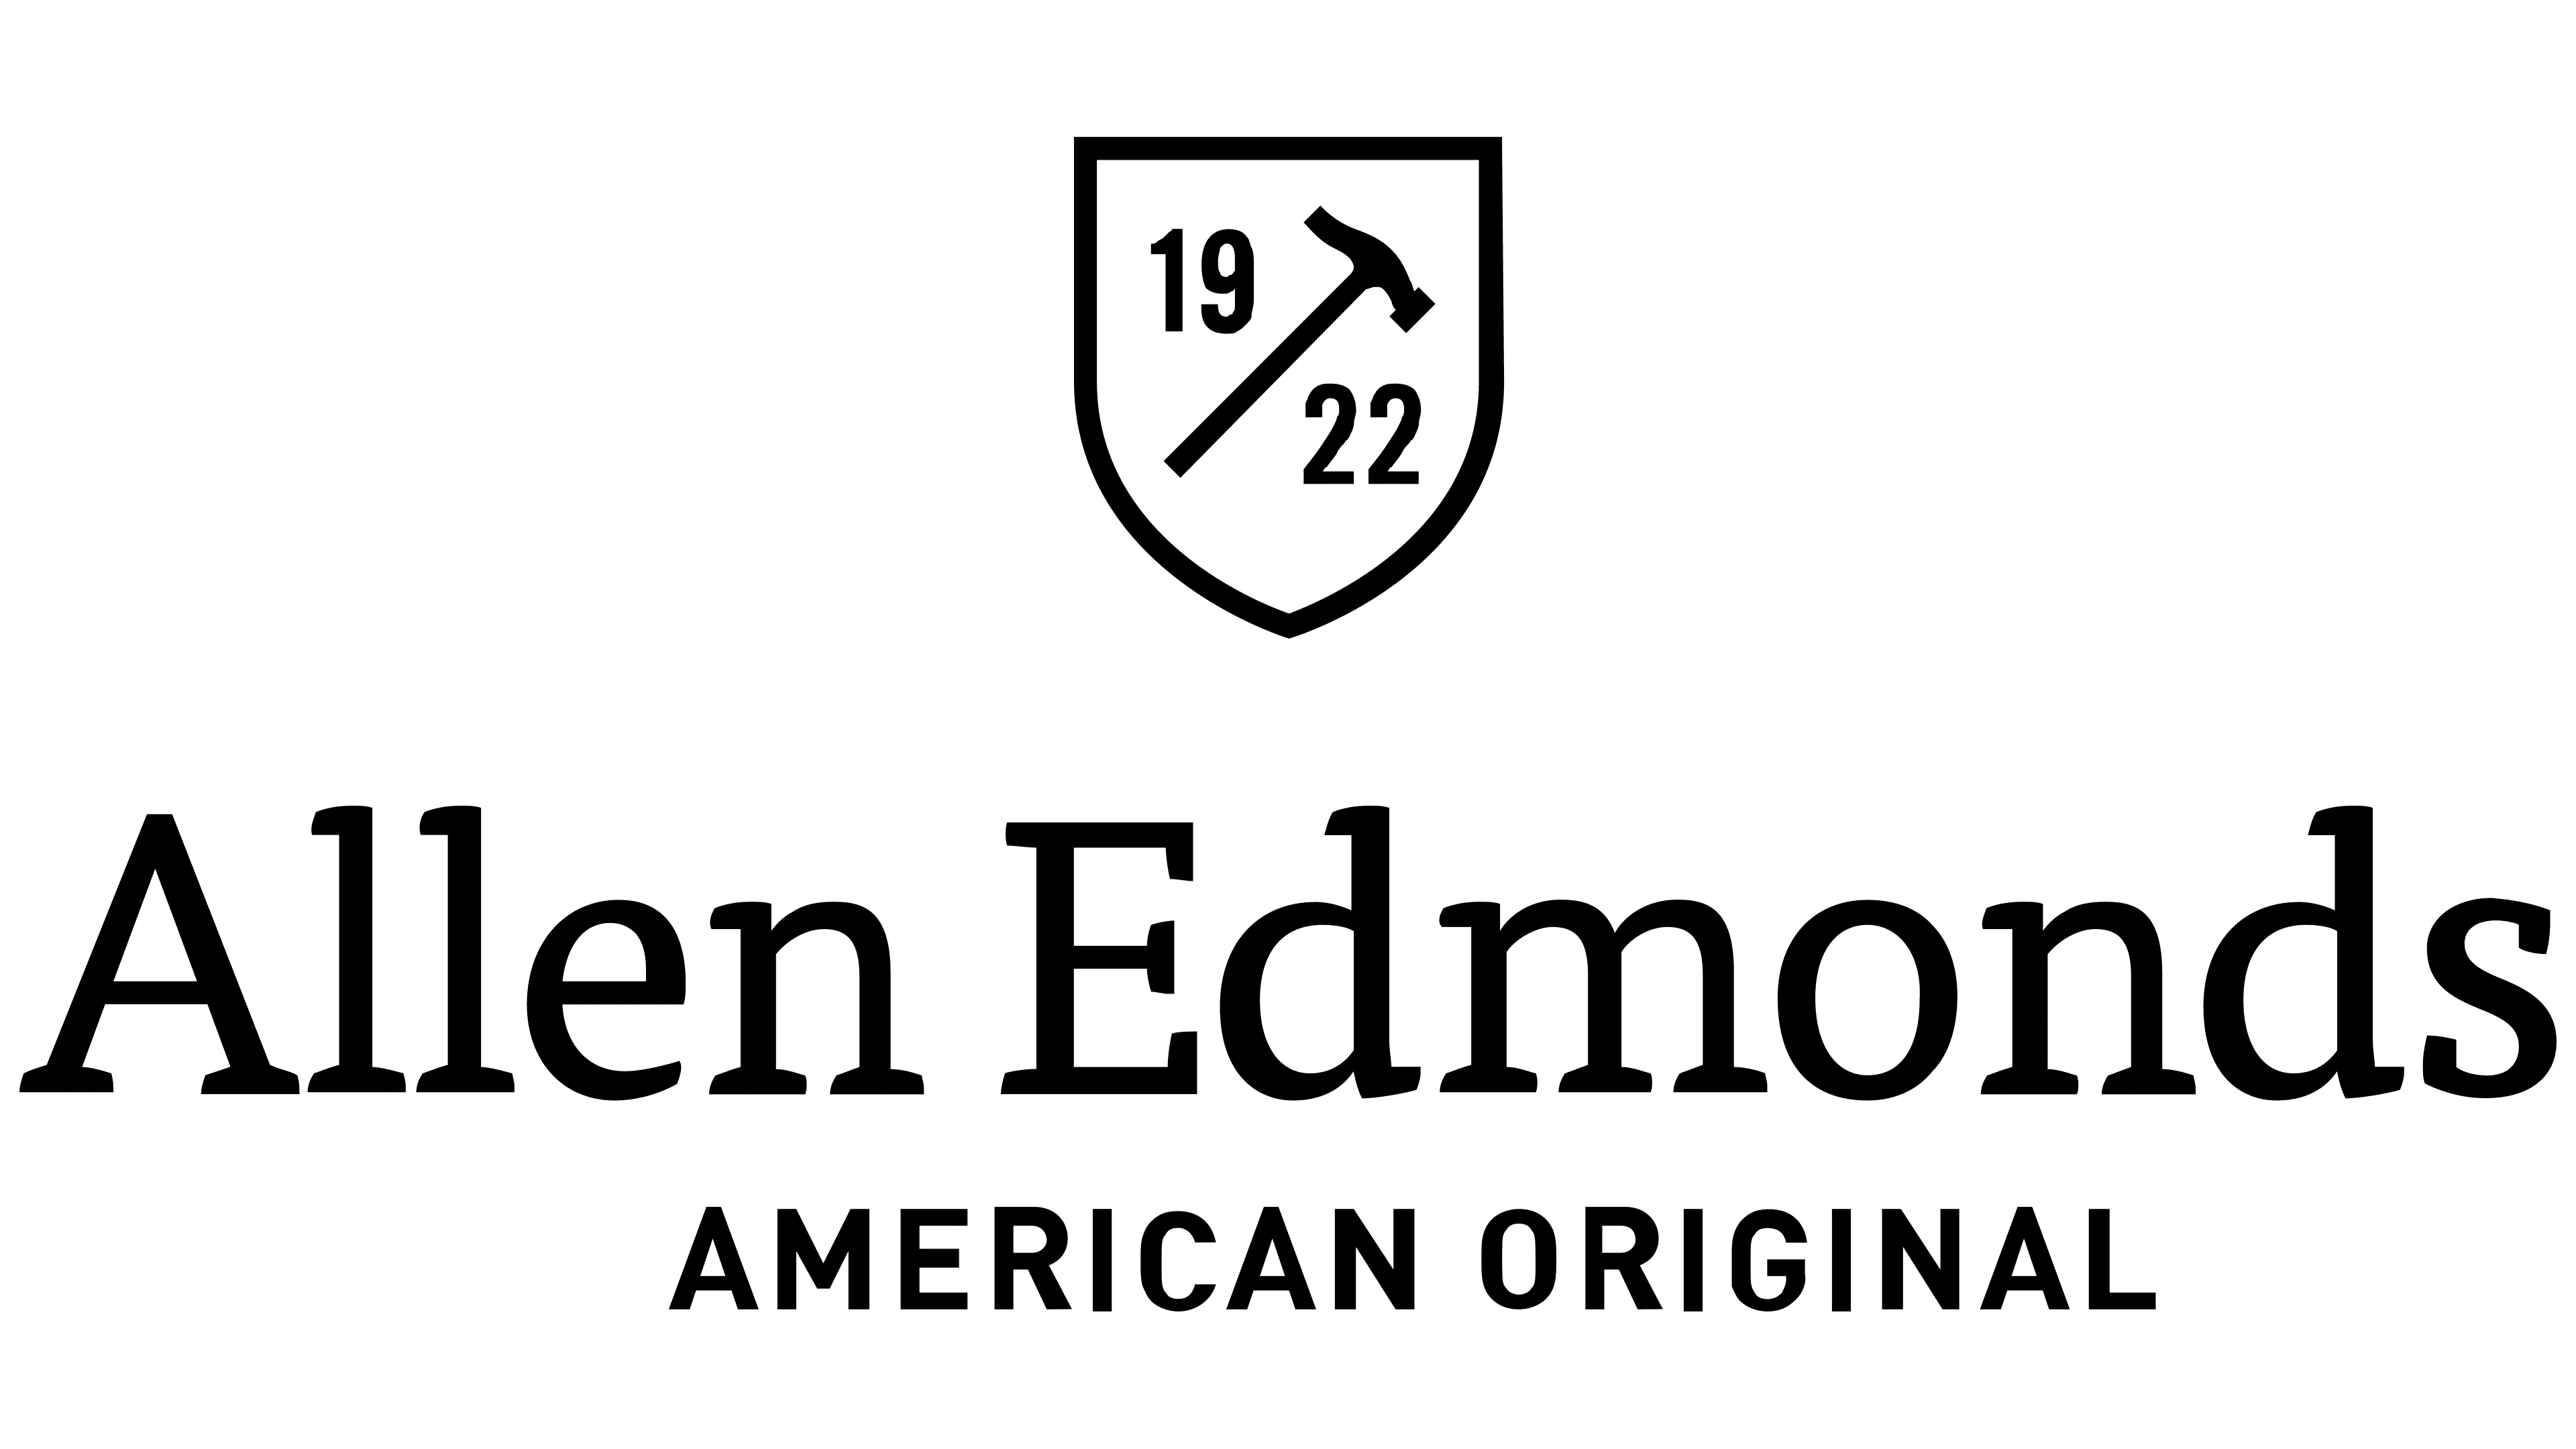 Allen Edmonds Logo